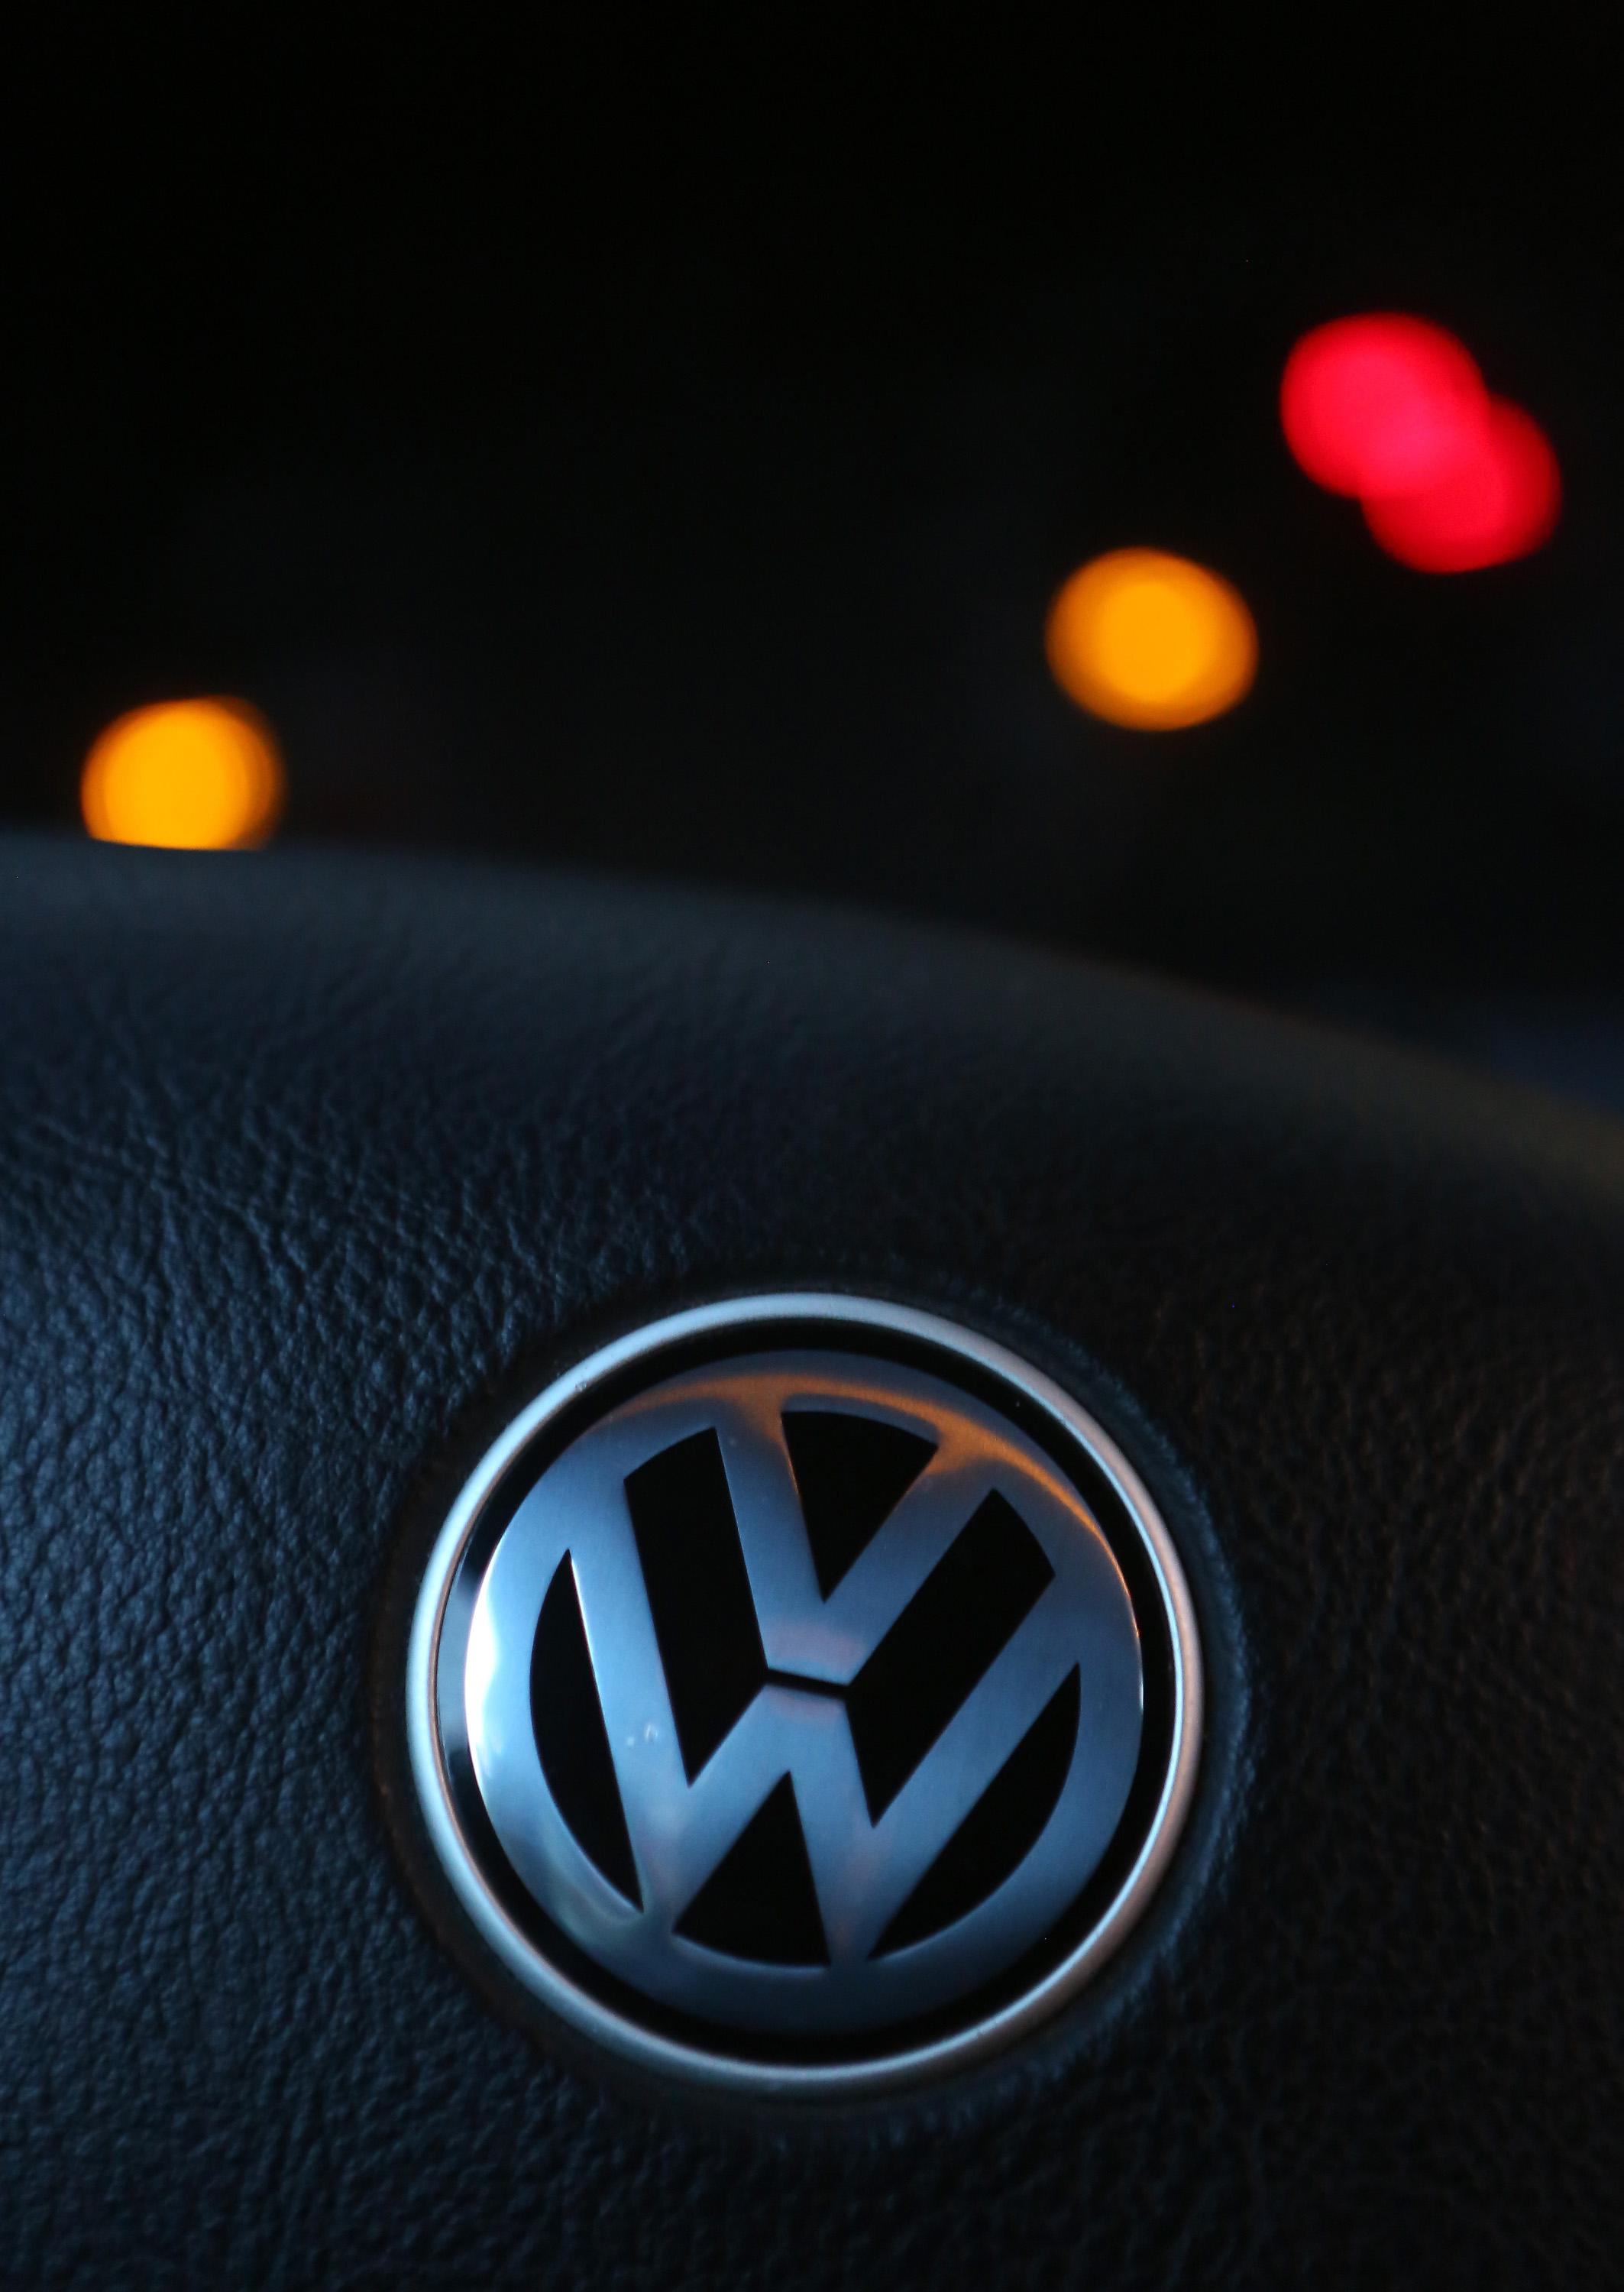 A Volkswagen (VW) logo is seen on the steering wheel of one of the Volkswagen cars in Berlin on Sept. 18, 2015.